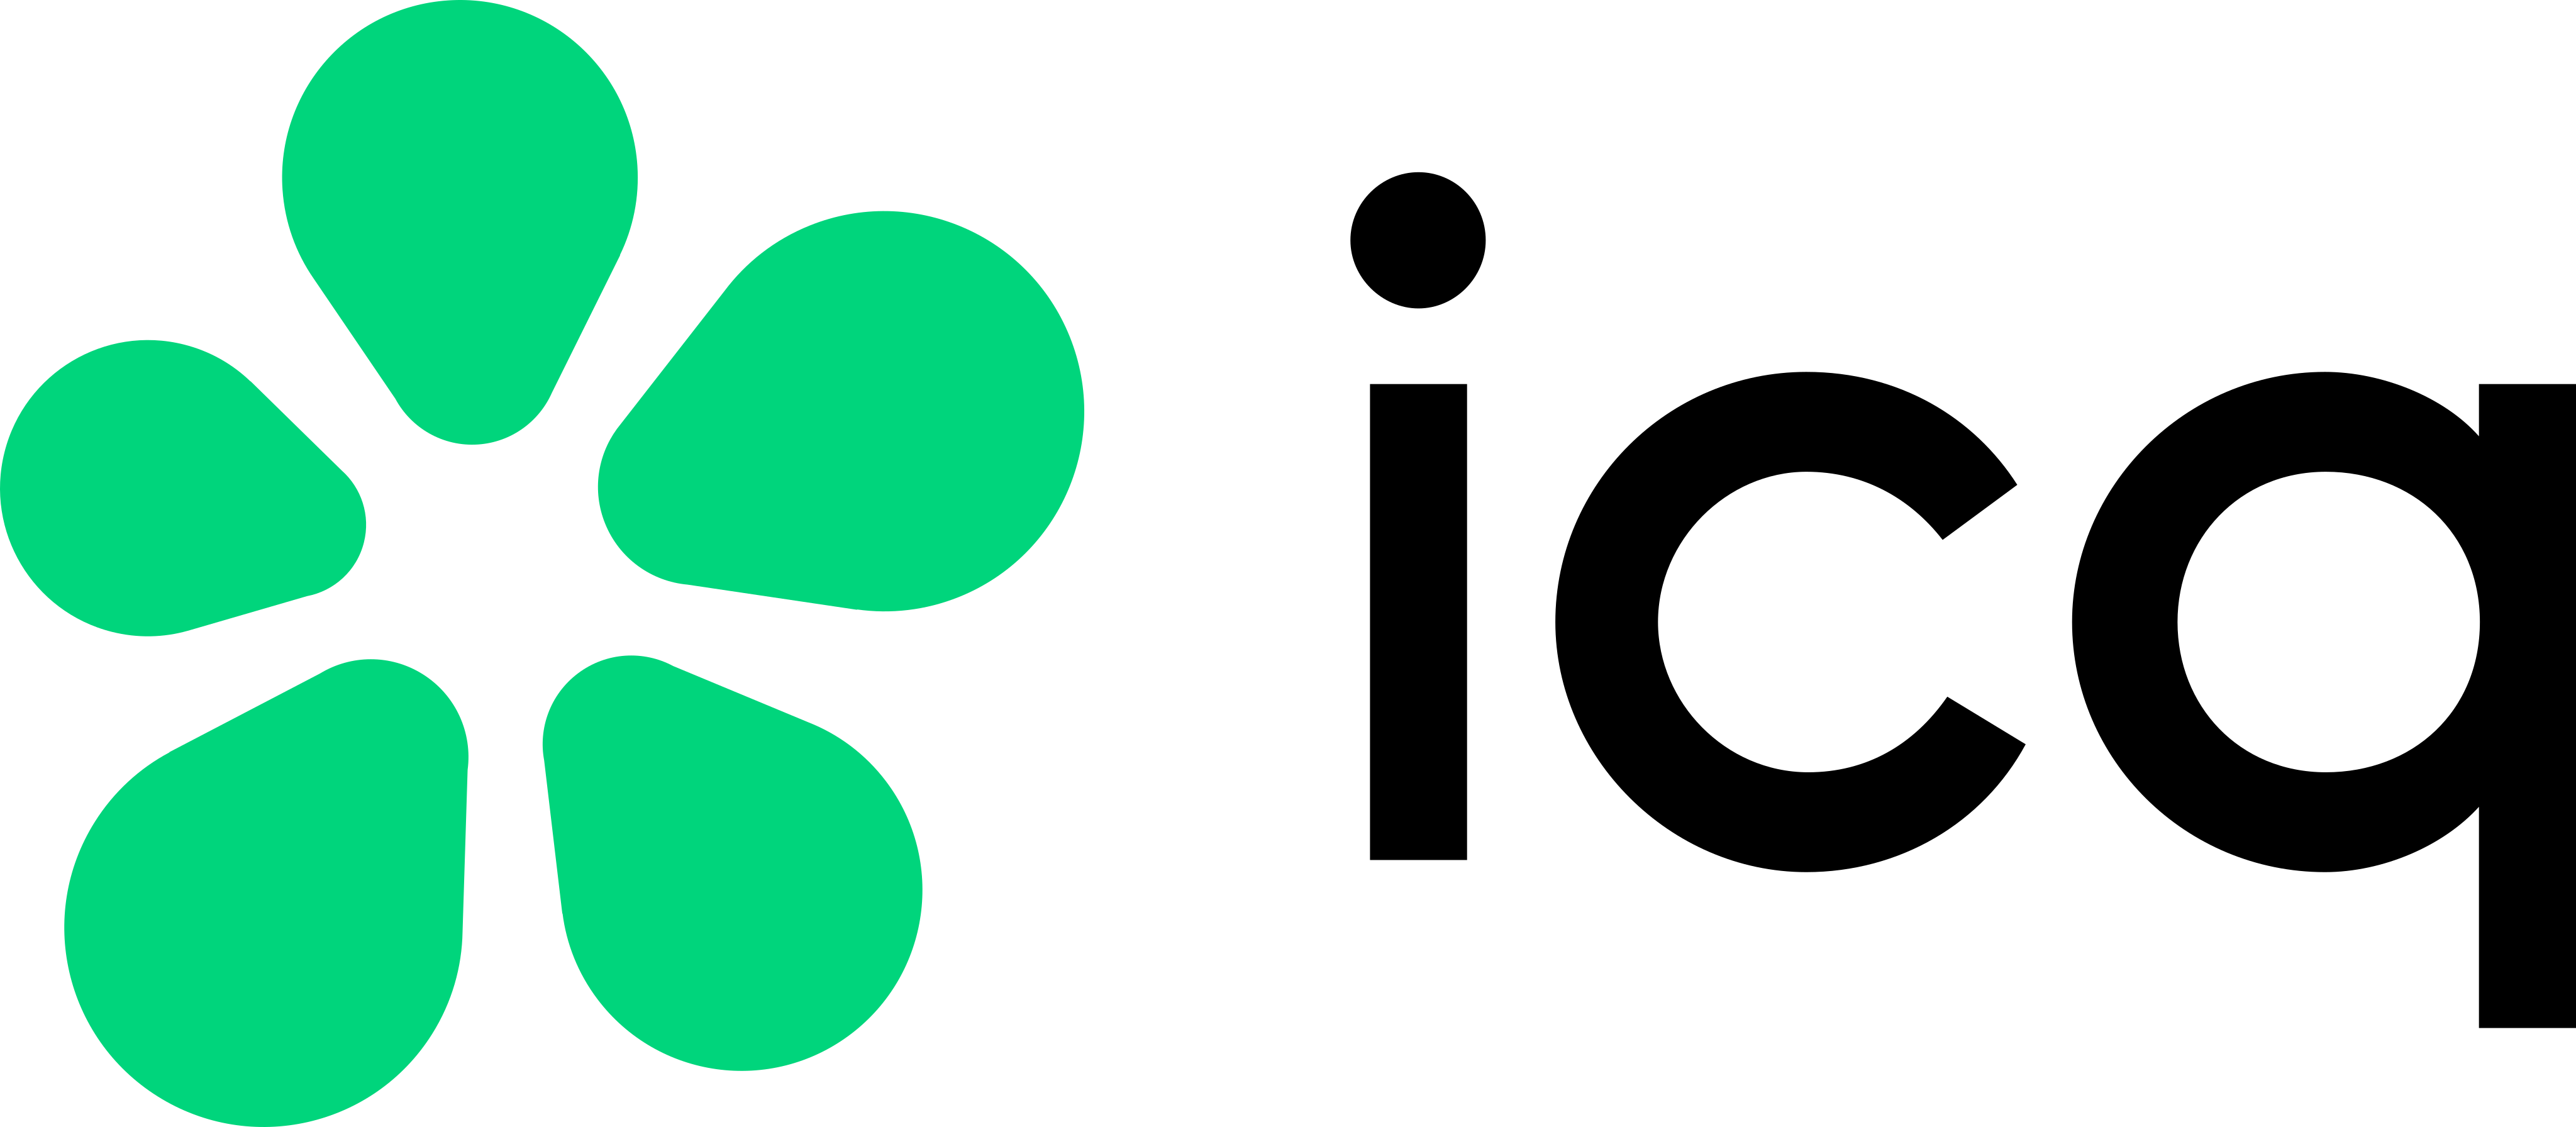 icq logo - ICQ Logo